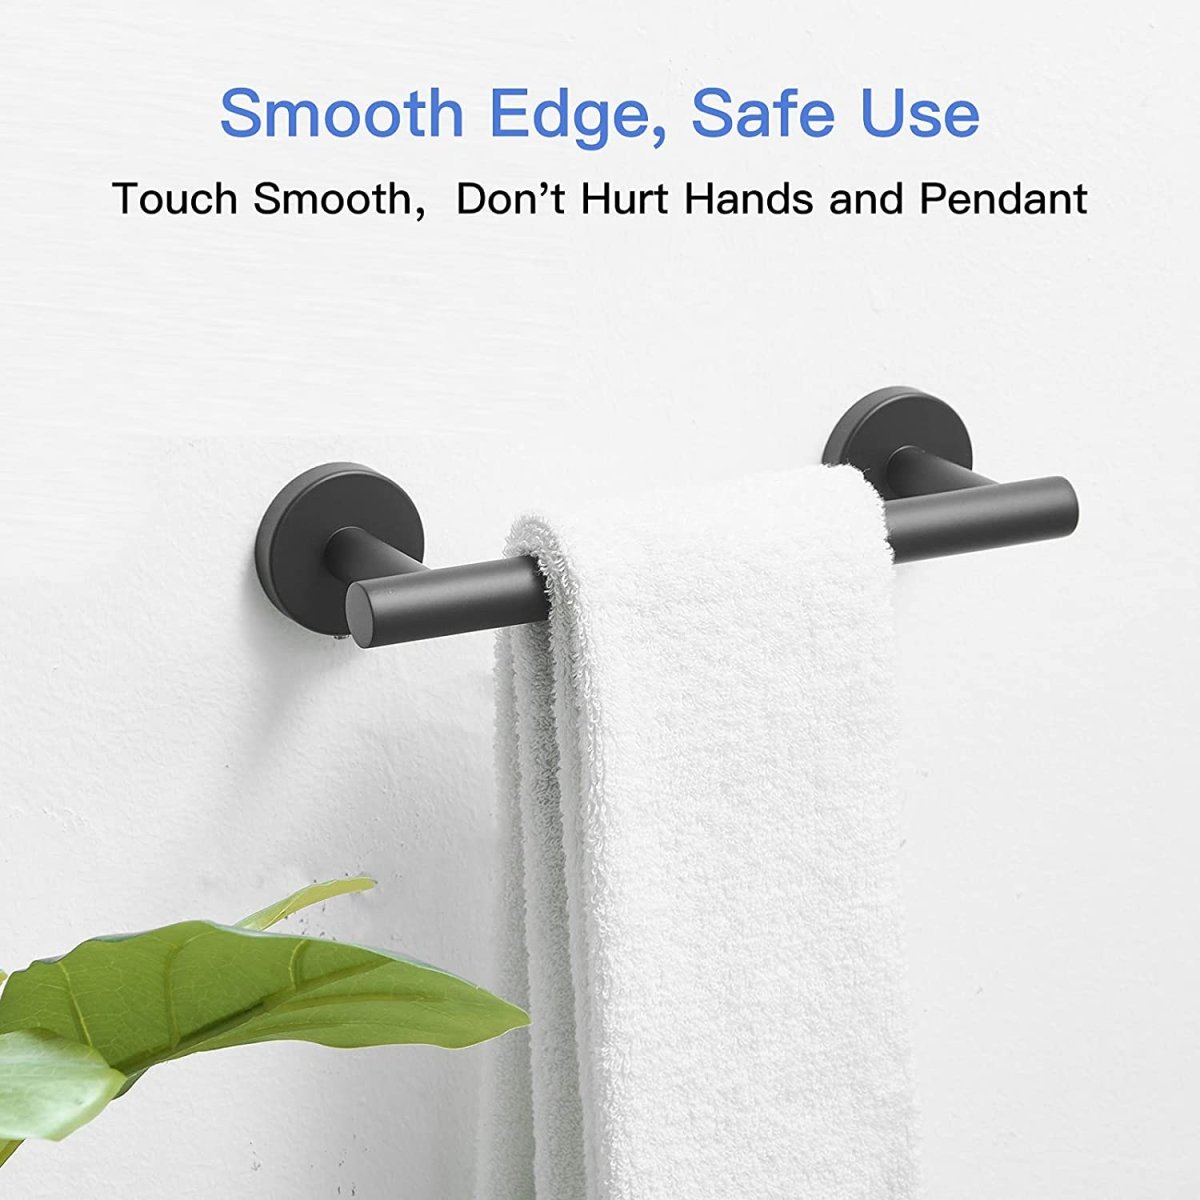 Single Wall Mounted Hand Towel Holder Matte Black - buyfaucet.com